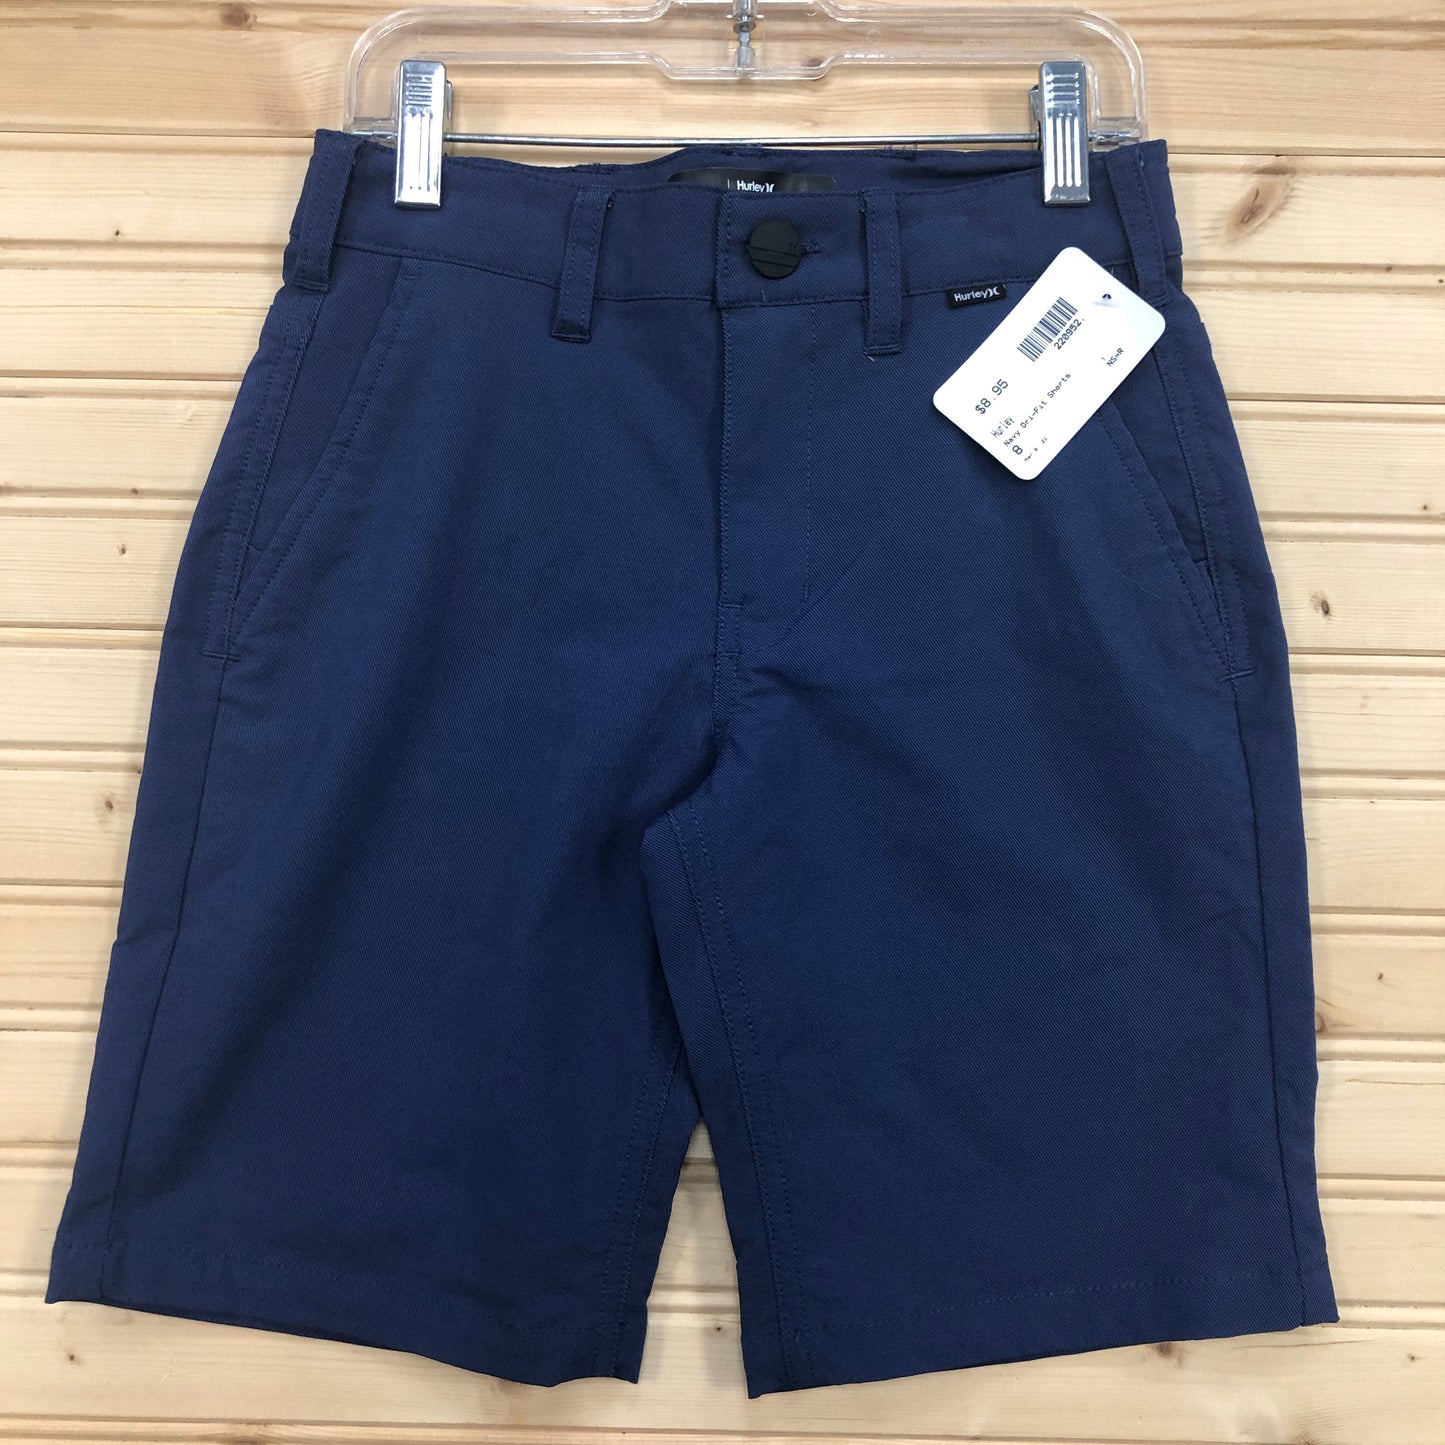 Navy Dri-Fit Shorts